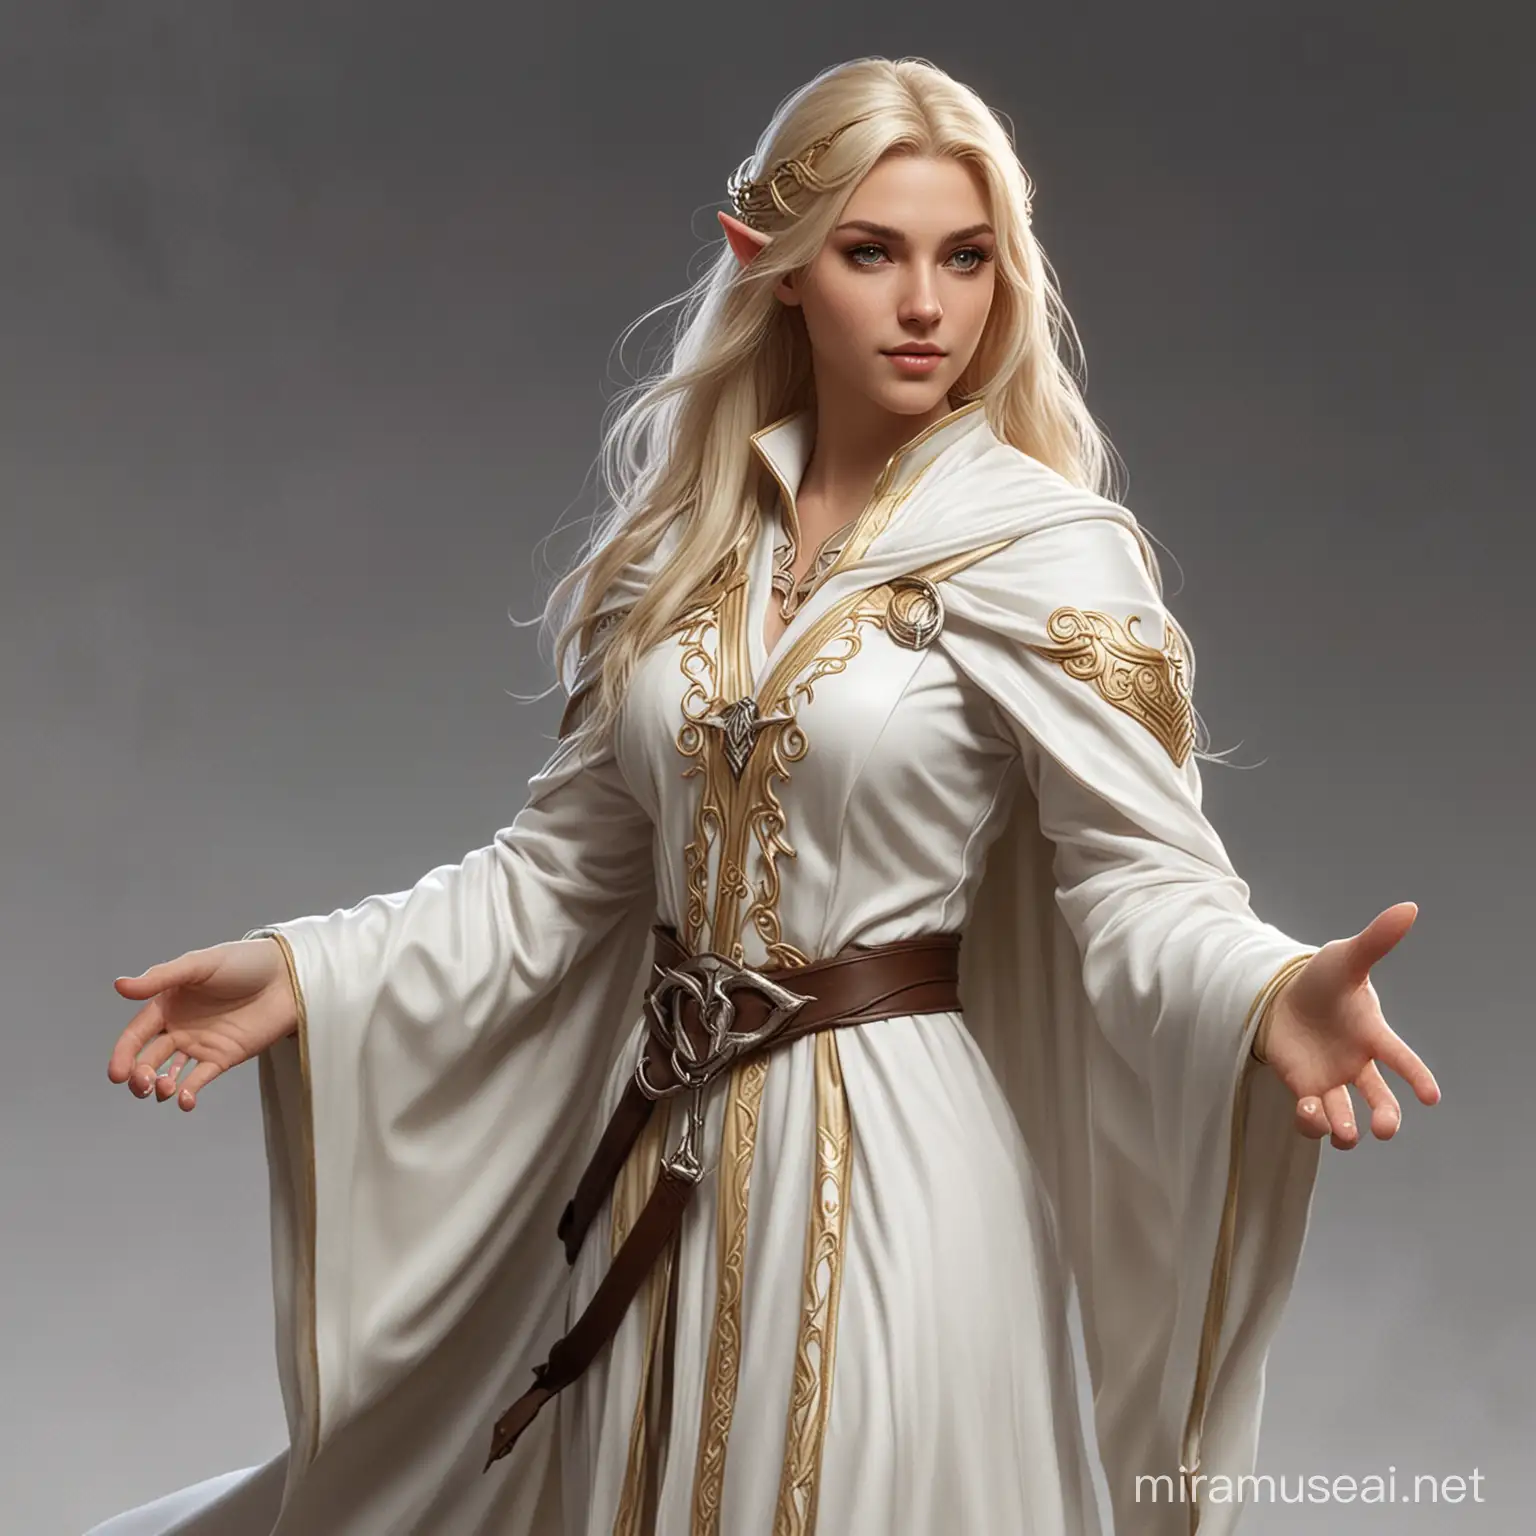 Half-elf, cleric, blonde, female, kind, white robes.